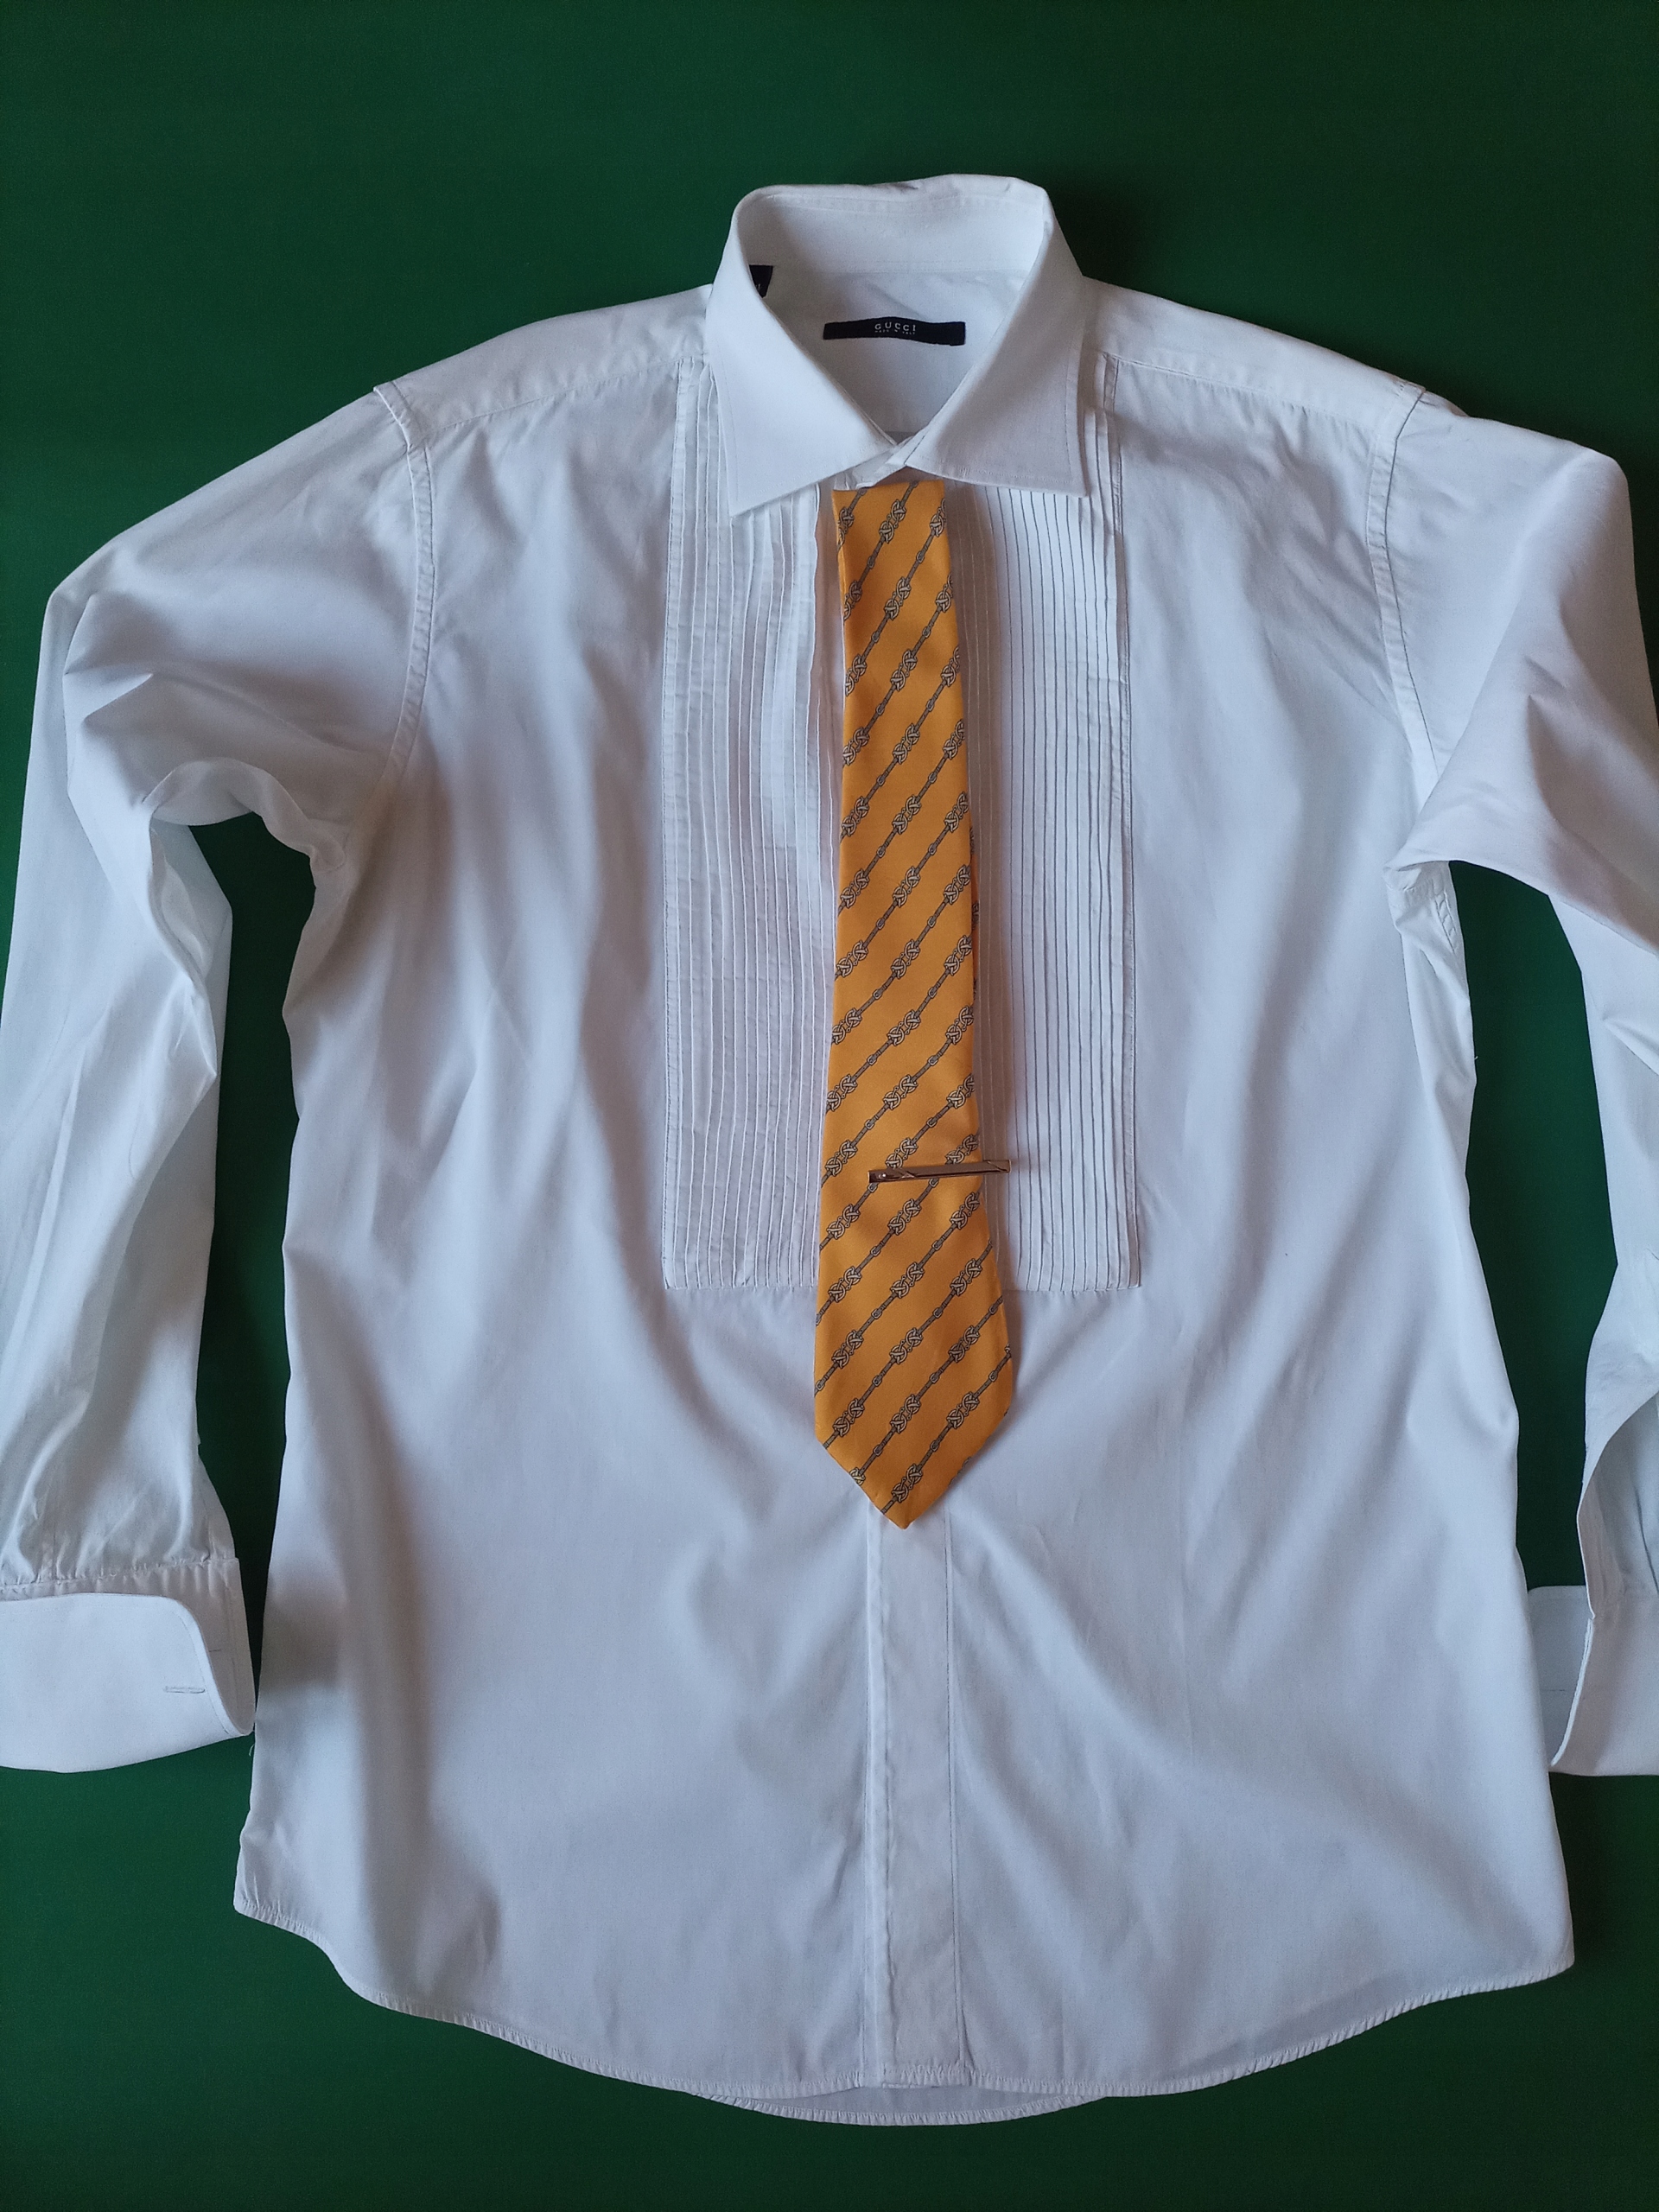 Hermes мужская галстука + мужская рубашка Gucci + запонки